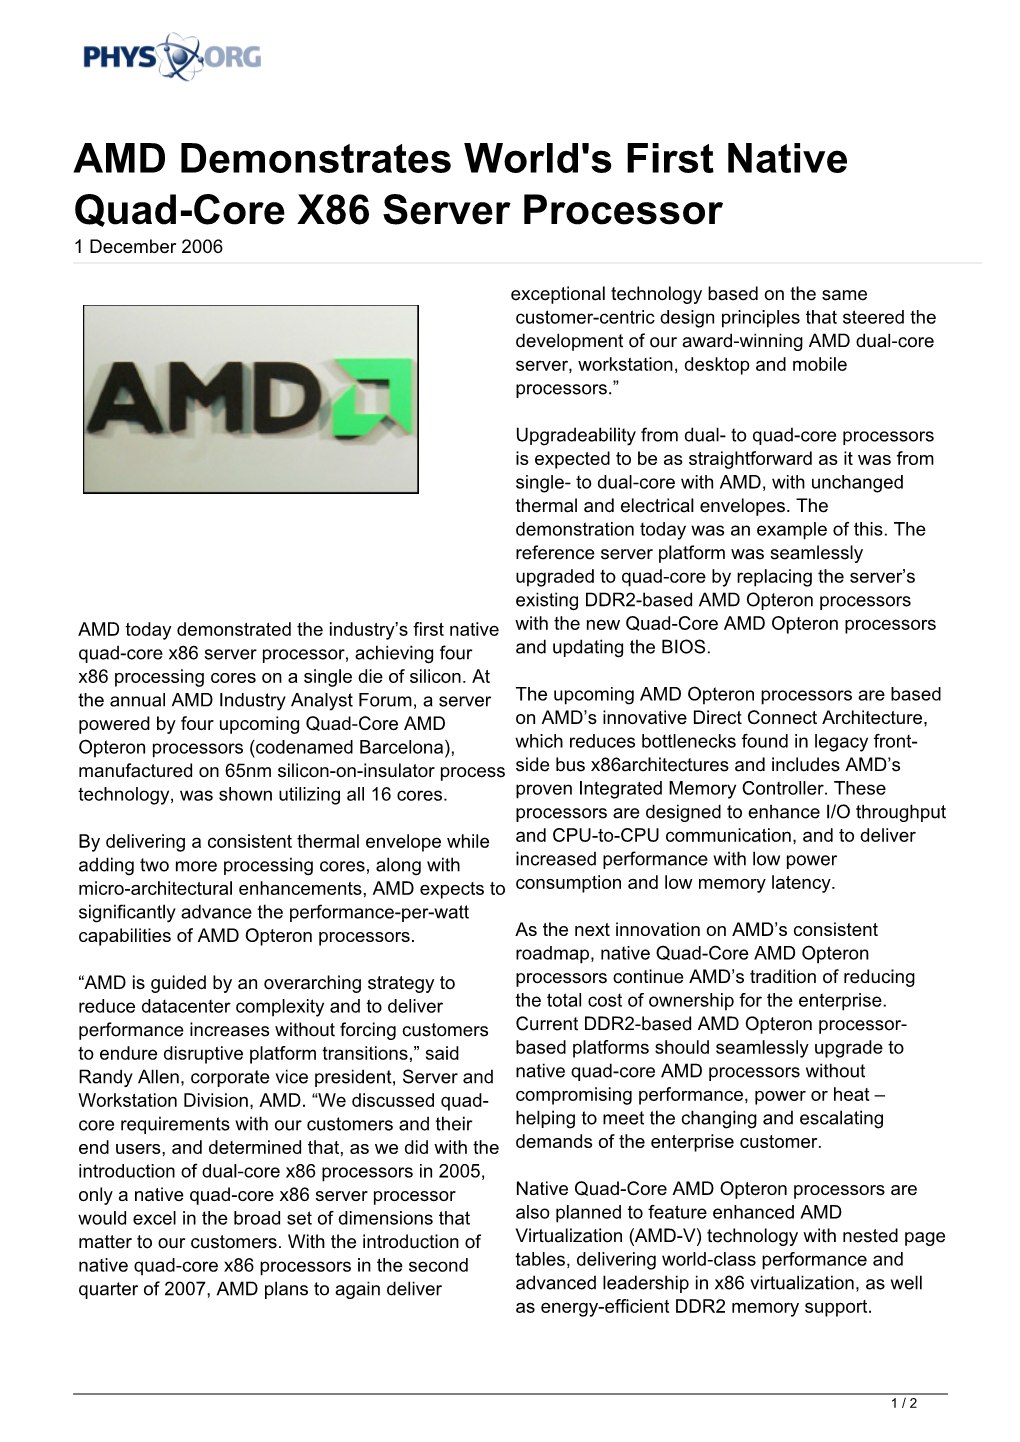 AMD Demonstrates World's First Native Quad-Core X86 Server Processor 1 December 2006